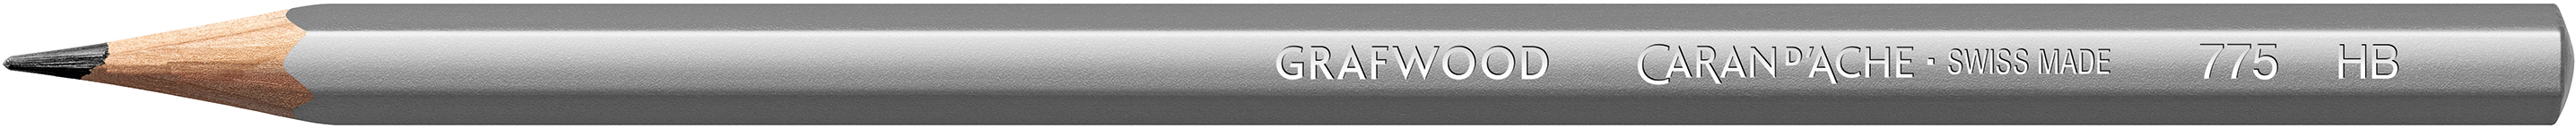 CARAN D'ACHE Crayon Grafwood HB 775.250